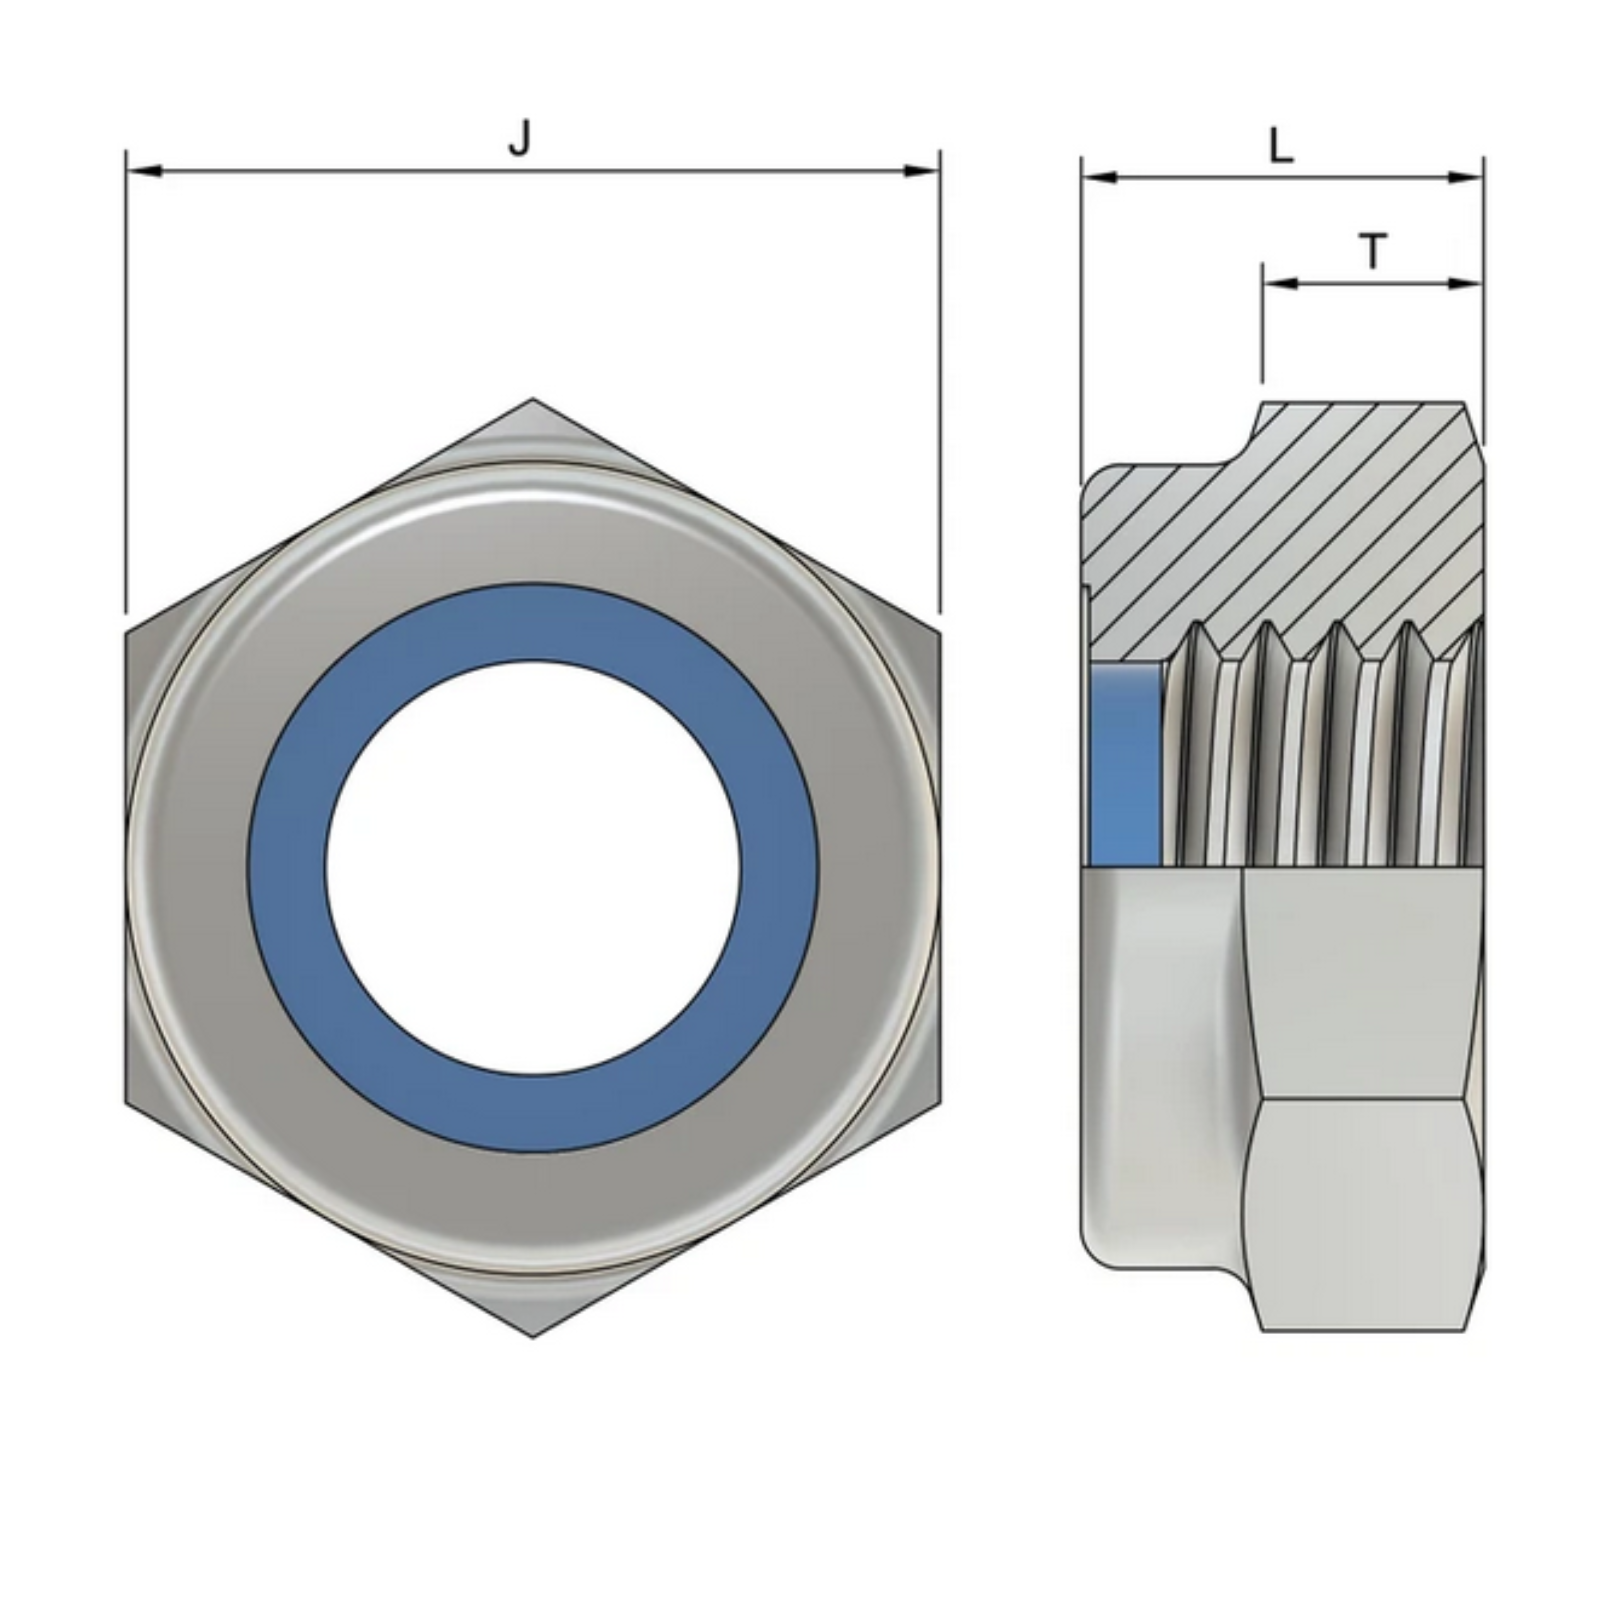 M7 Hexagon Nylon Locking Nuts (DIN 985) - Zinc Plated Steel